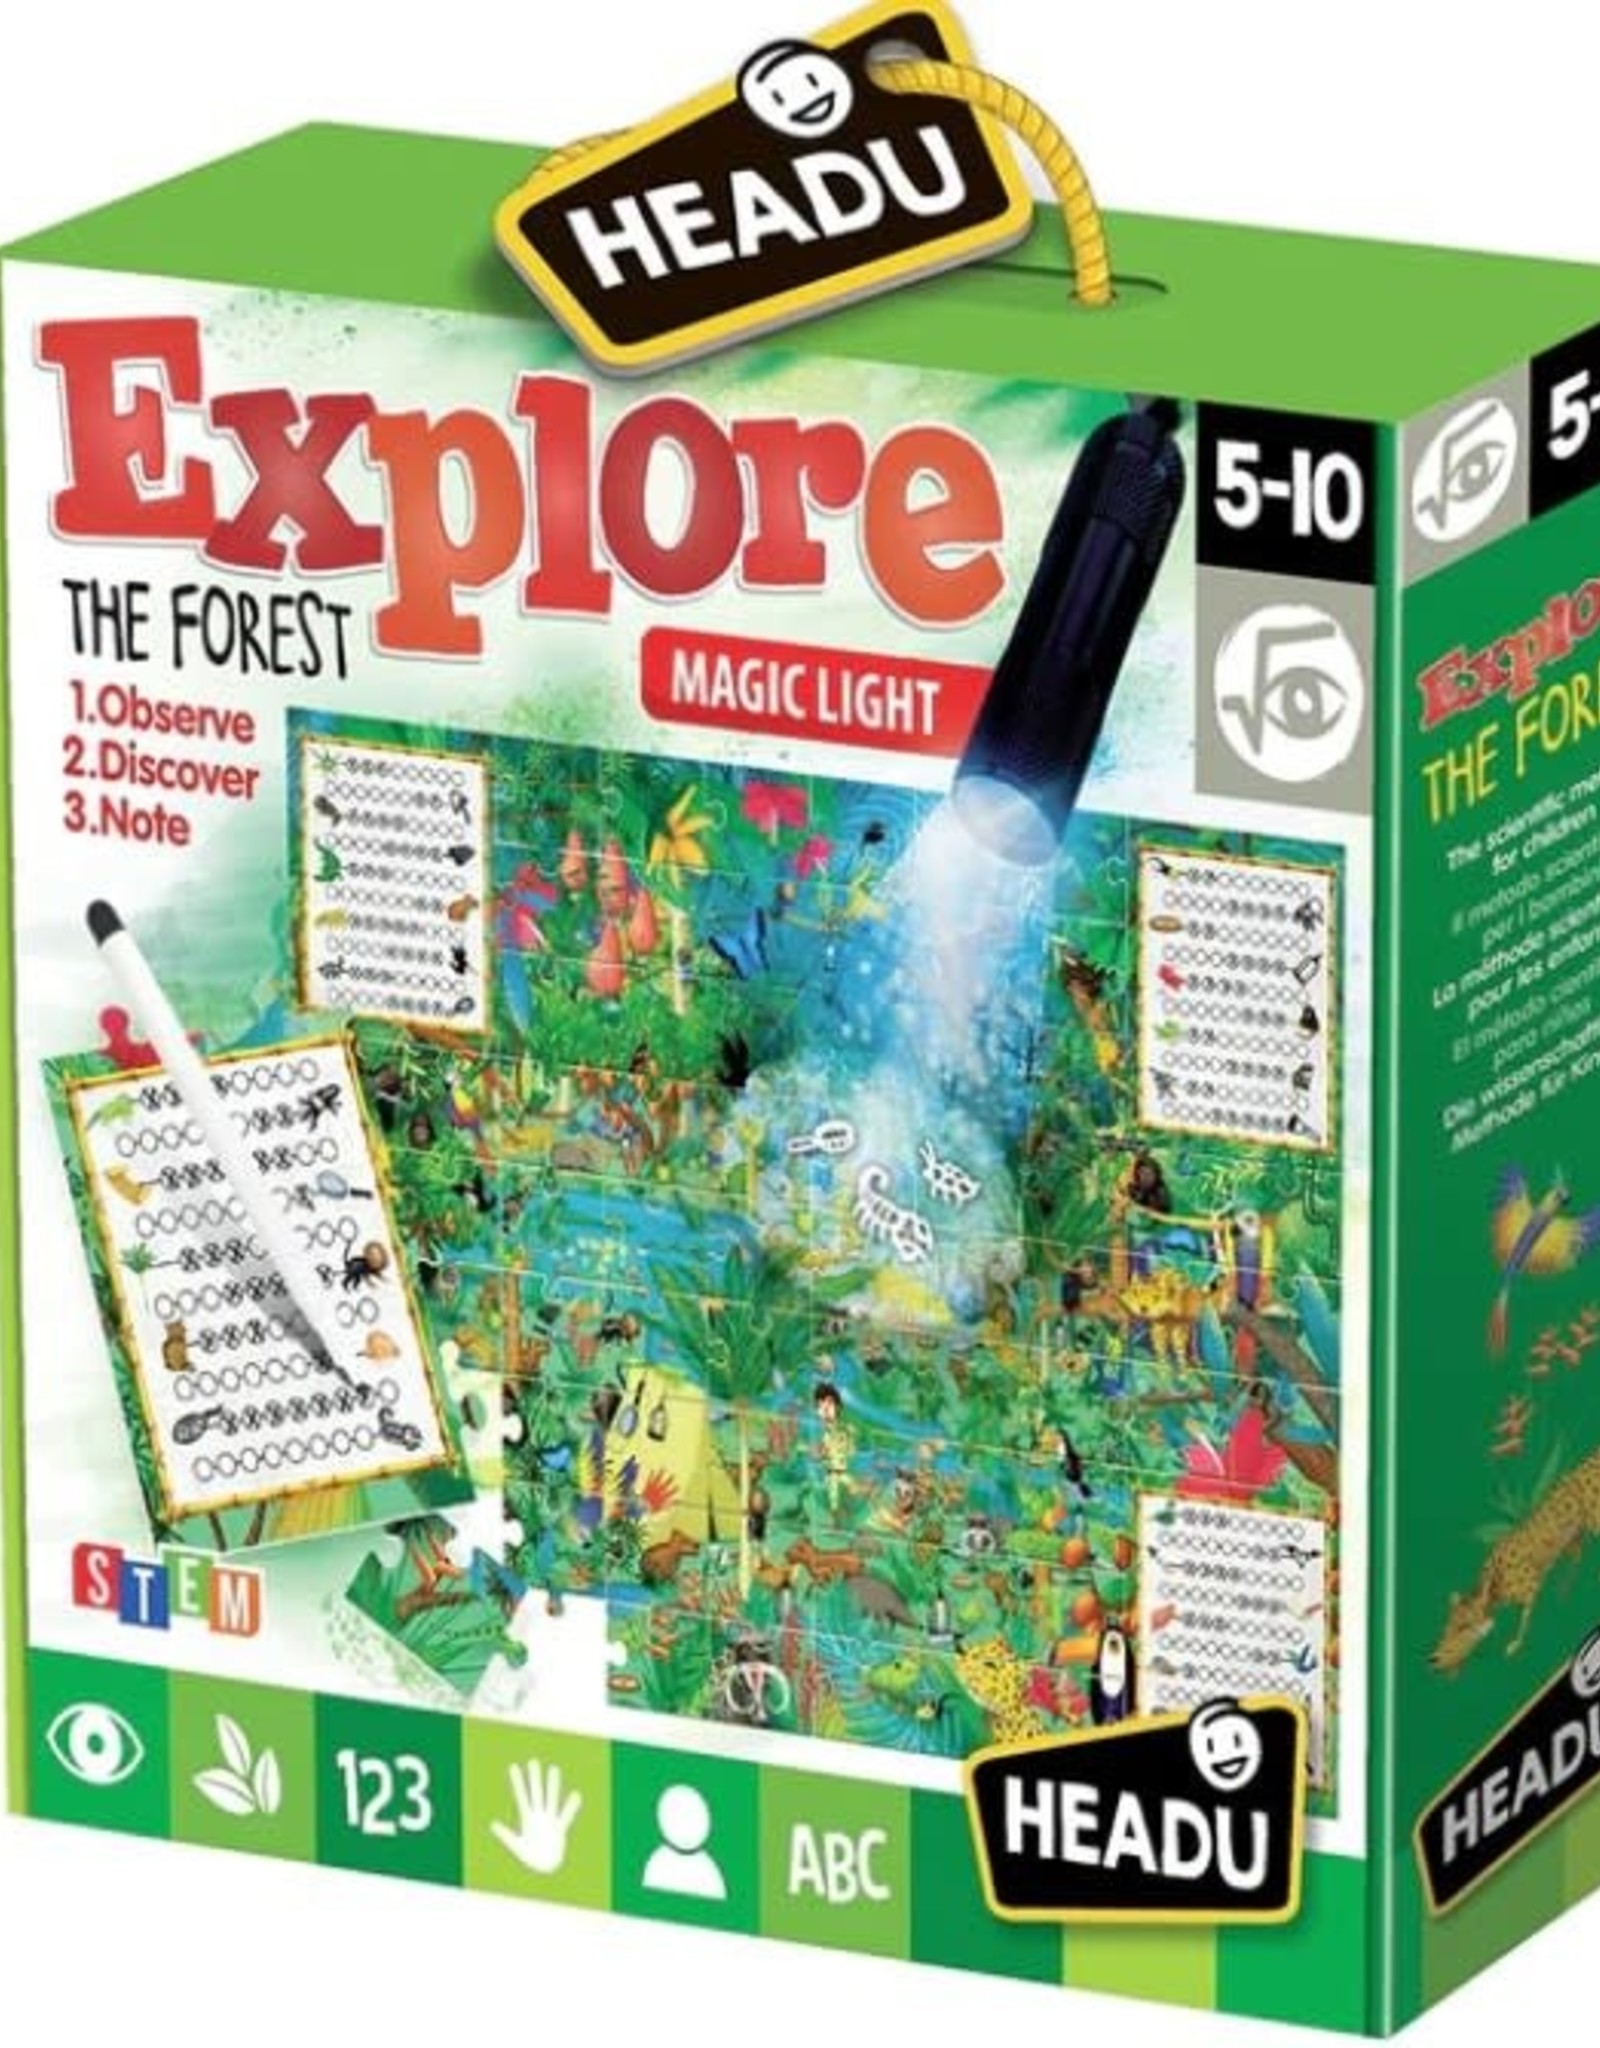 Headu Explore the Forest